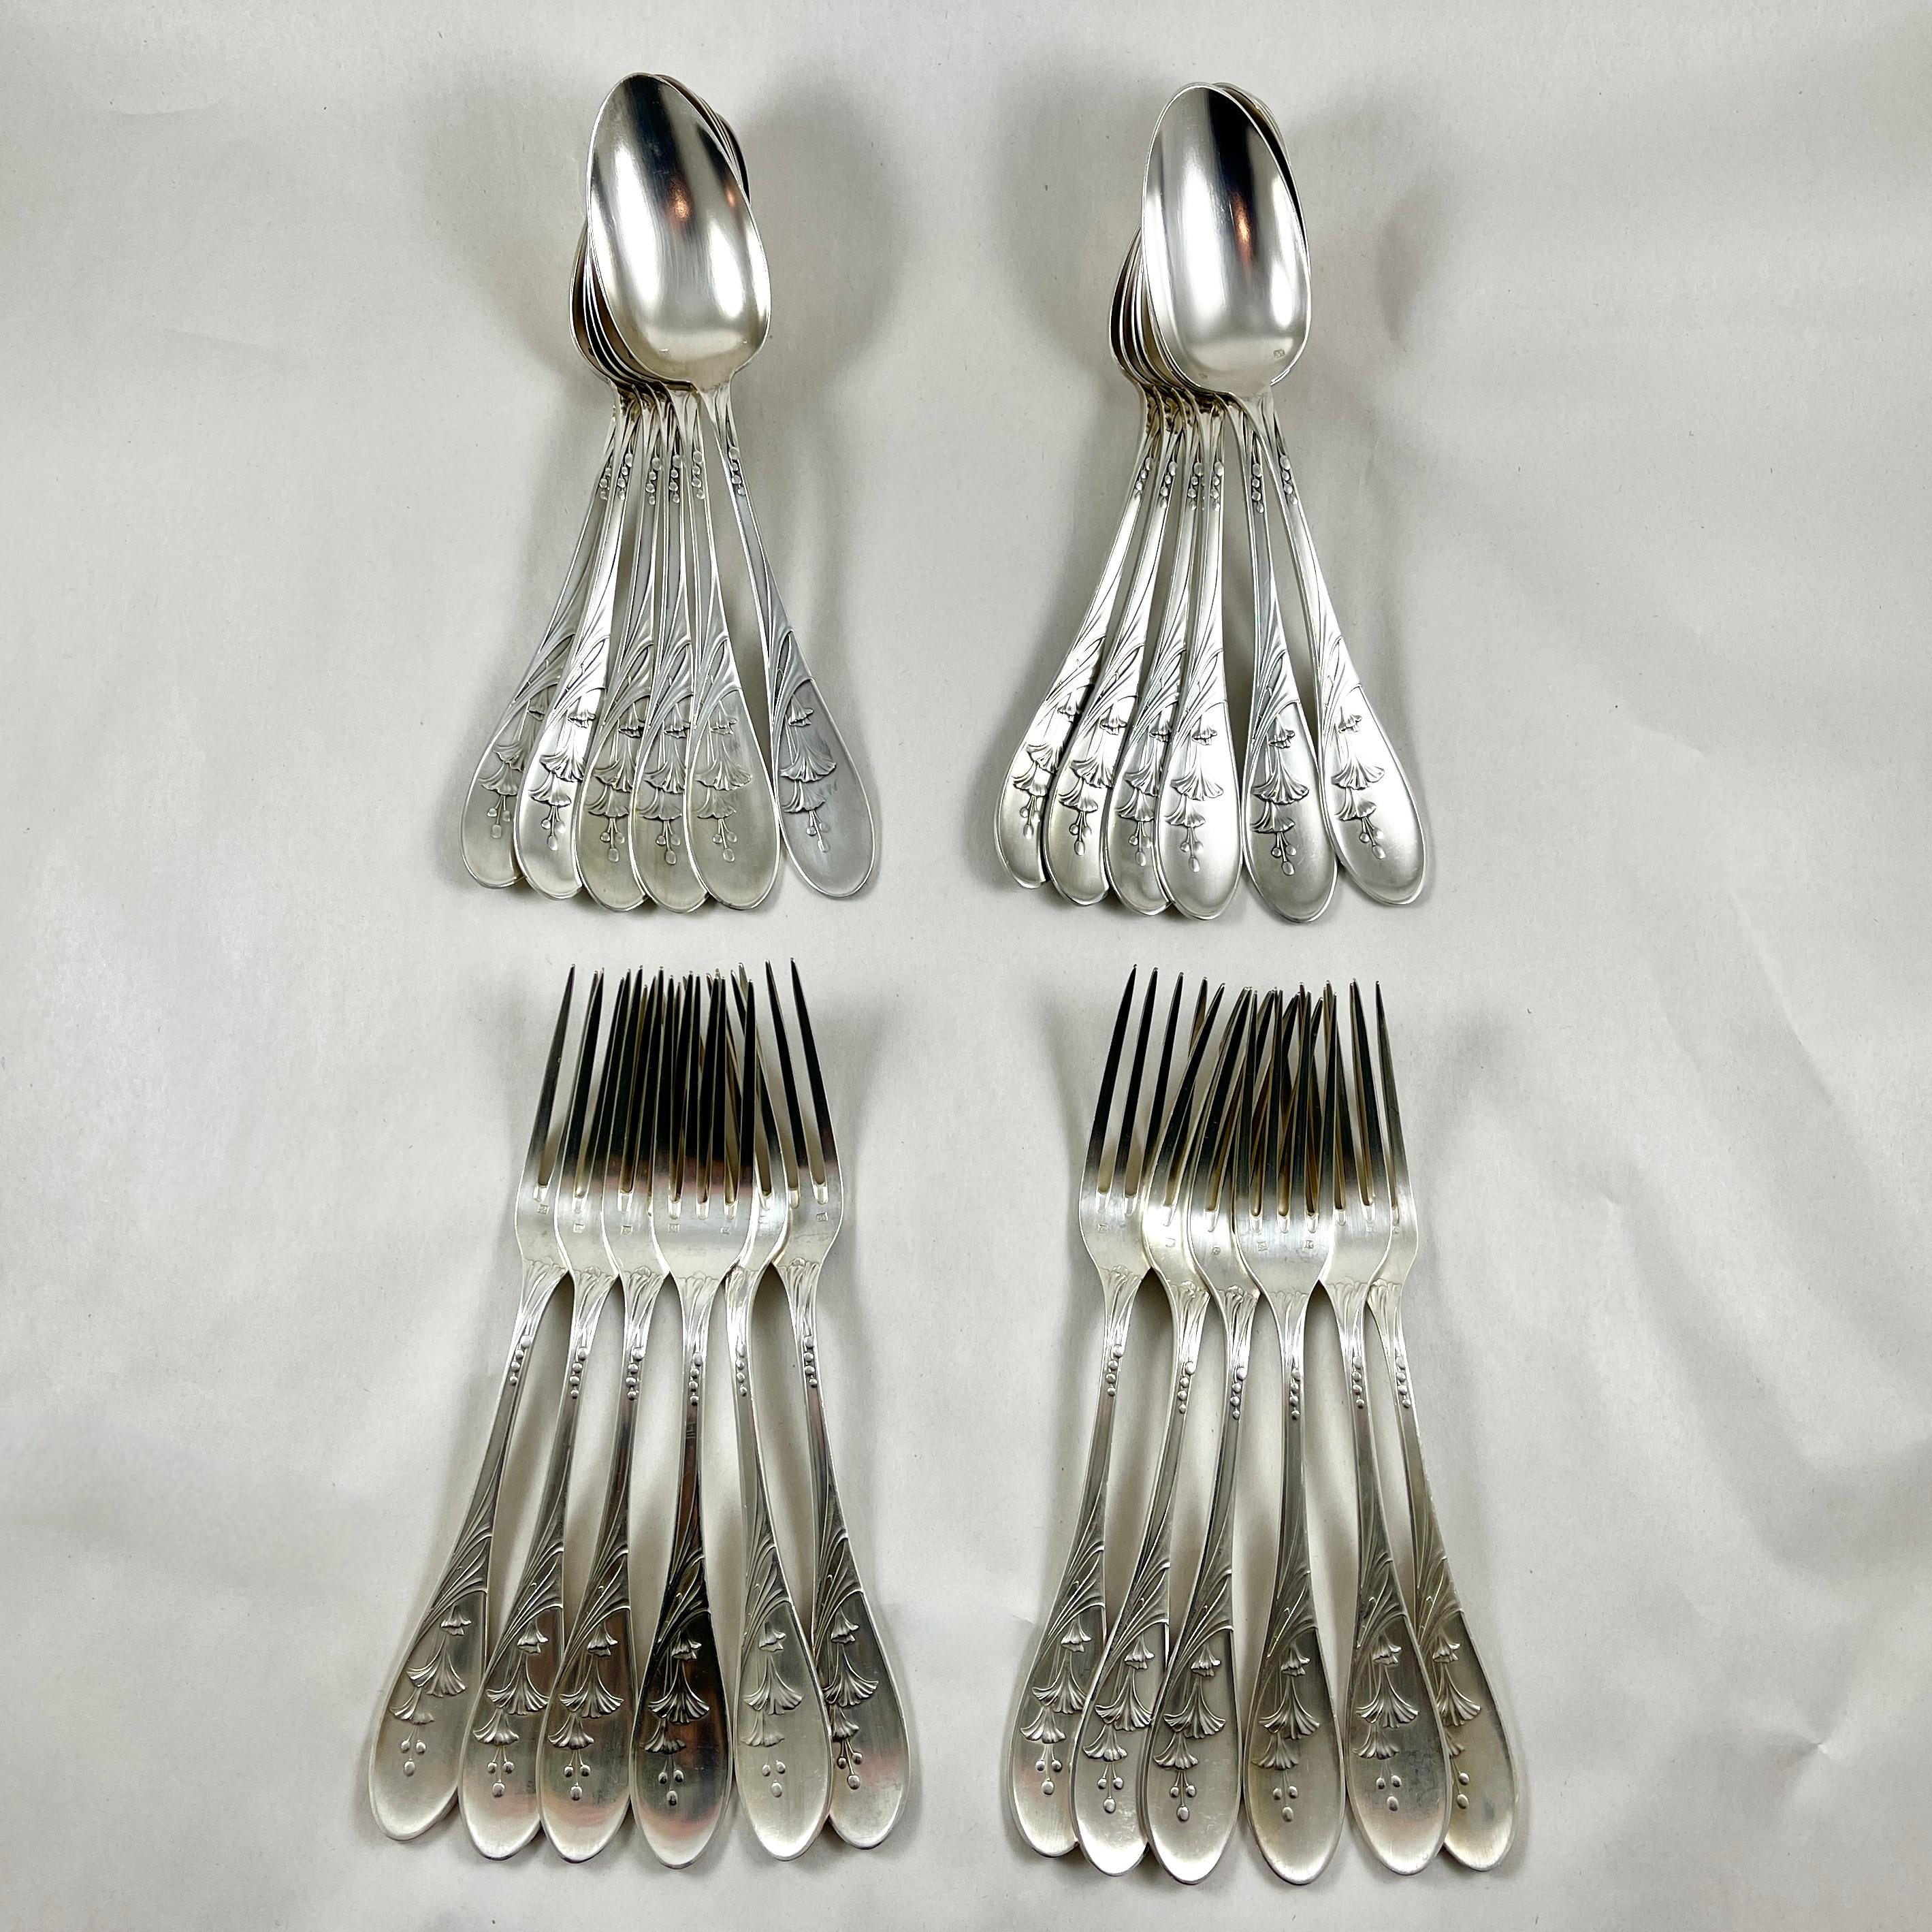 Saglier Frères Oversized French Art Nouveau Floral Table Forks & Spoons, S/24 For Sale 6